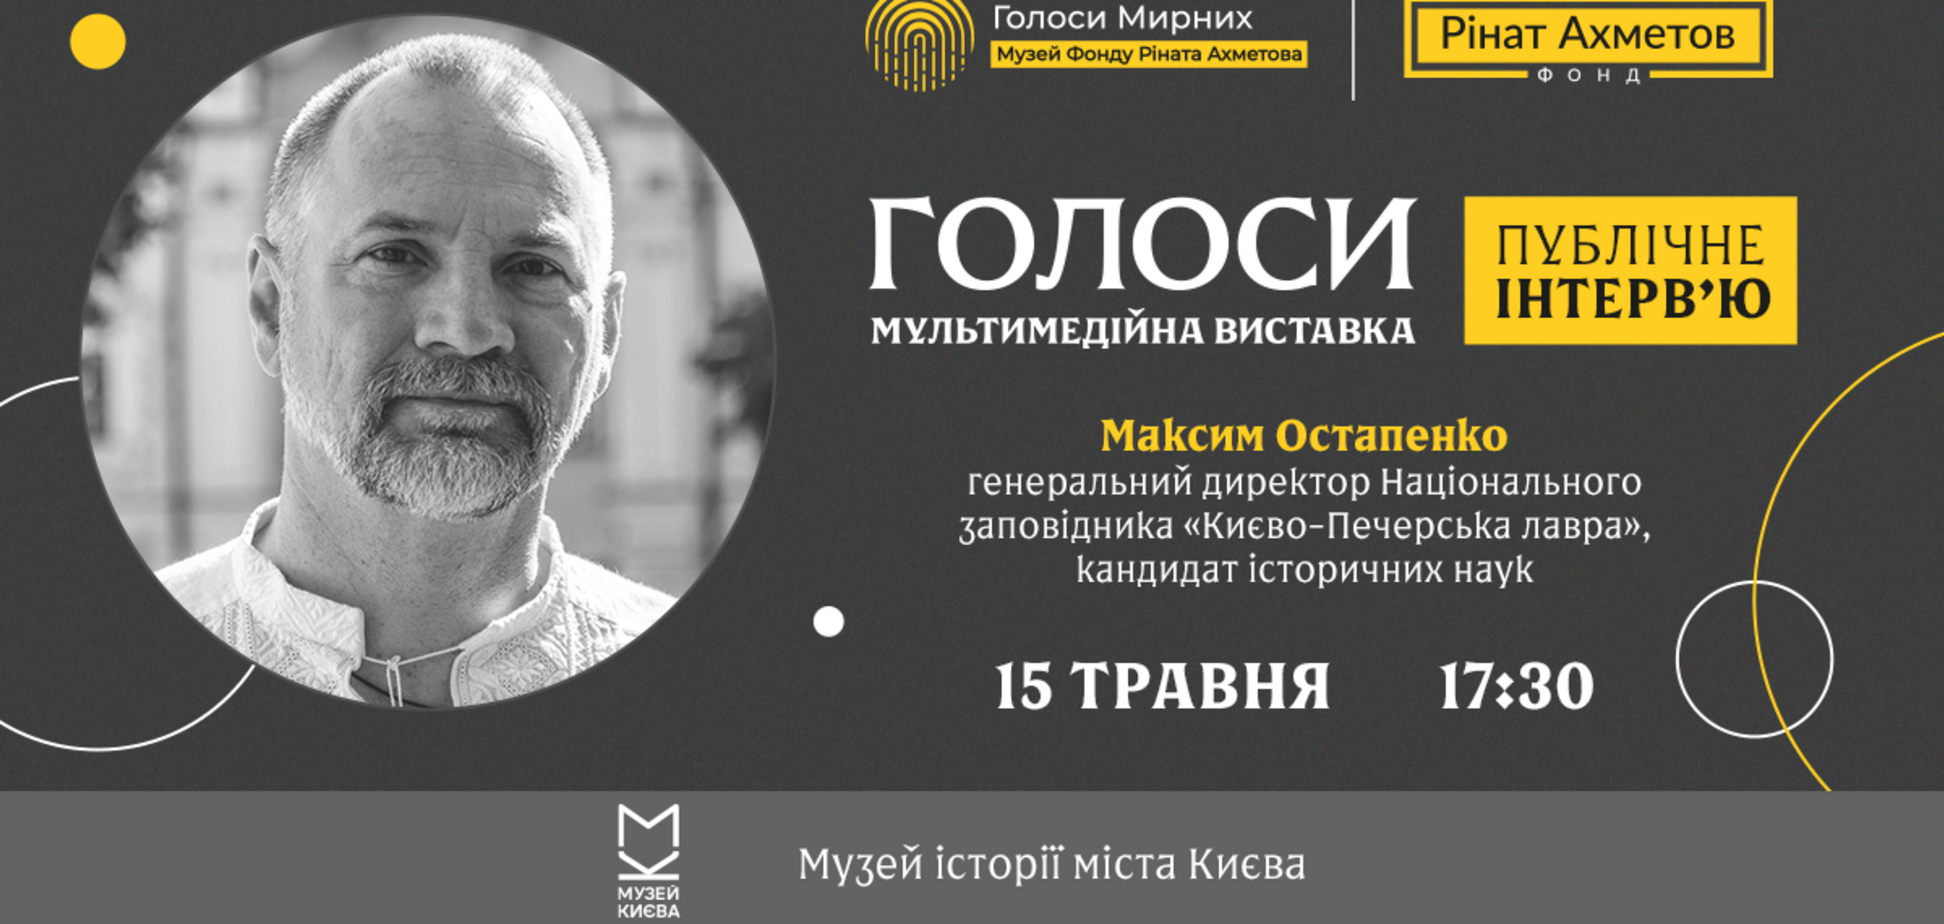 Директор 'Києво-Печерської лаври' Остапенко дасть інтерв'ю у рамках виставки 'Голоси' музею 'Голоси мирних' Фонду Ріната Ахметова